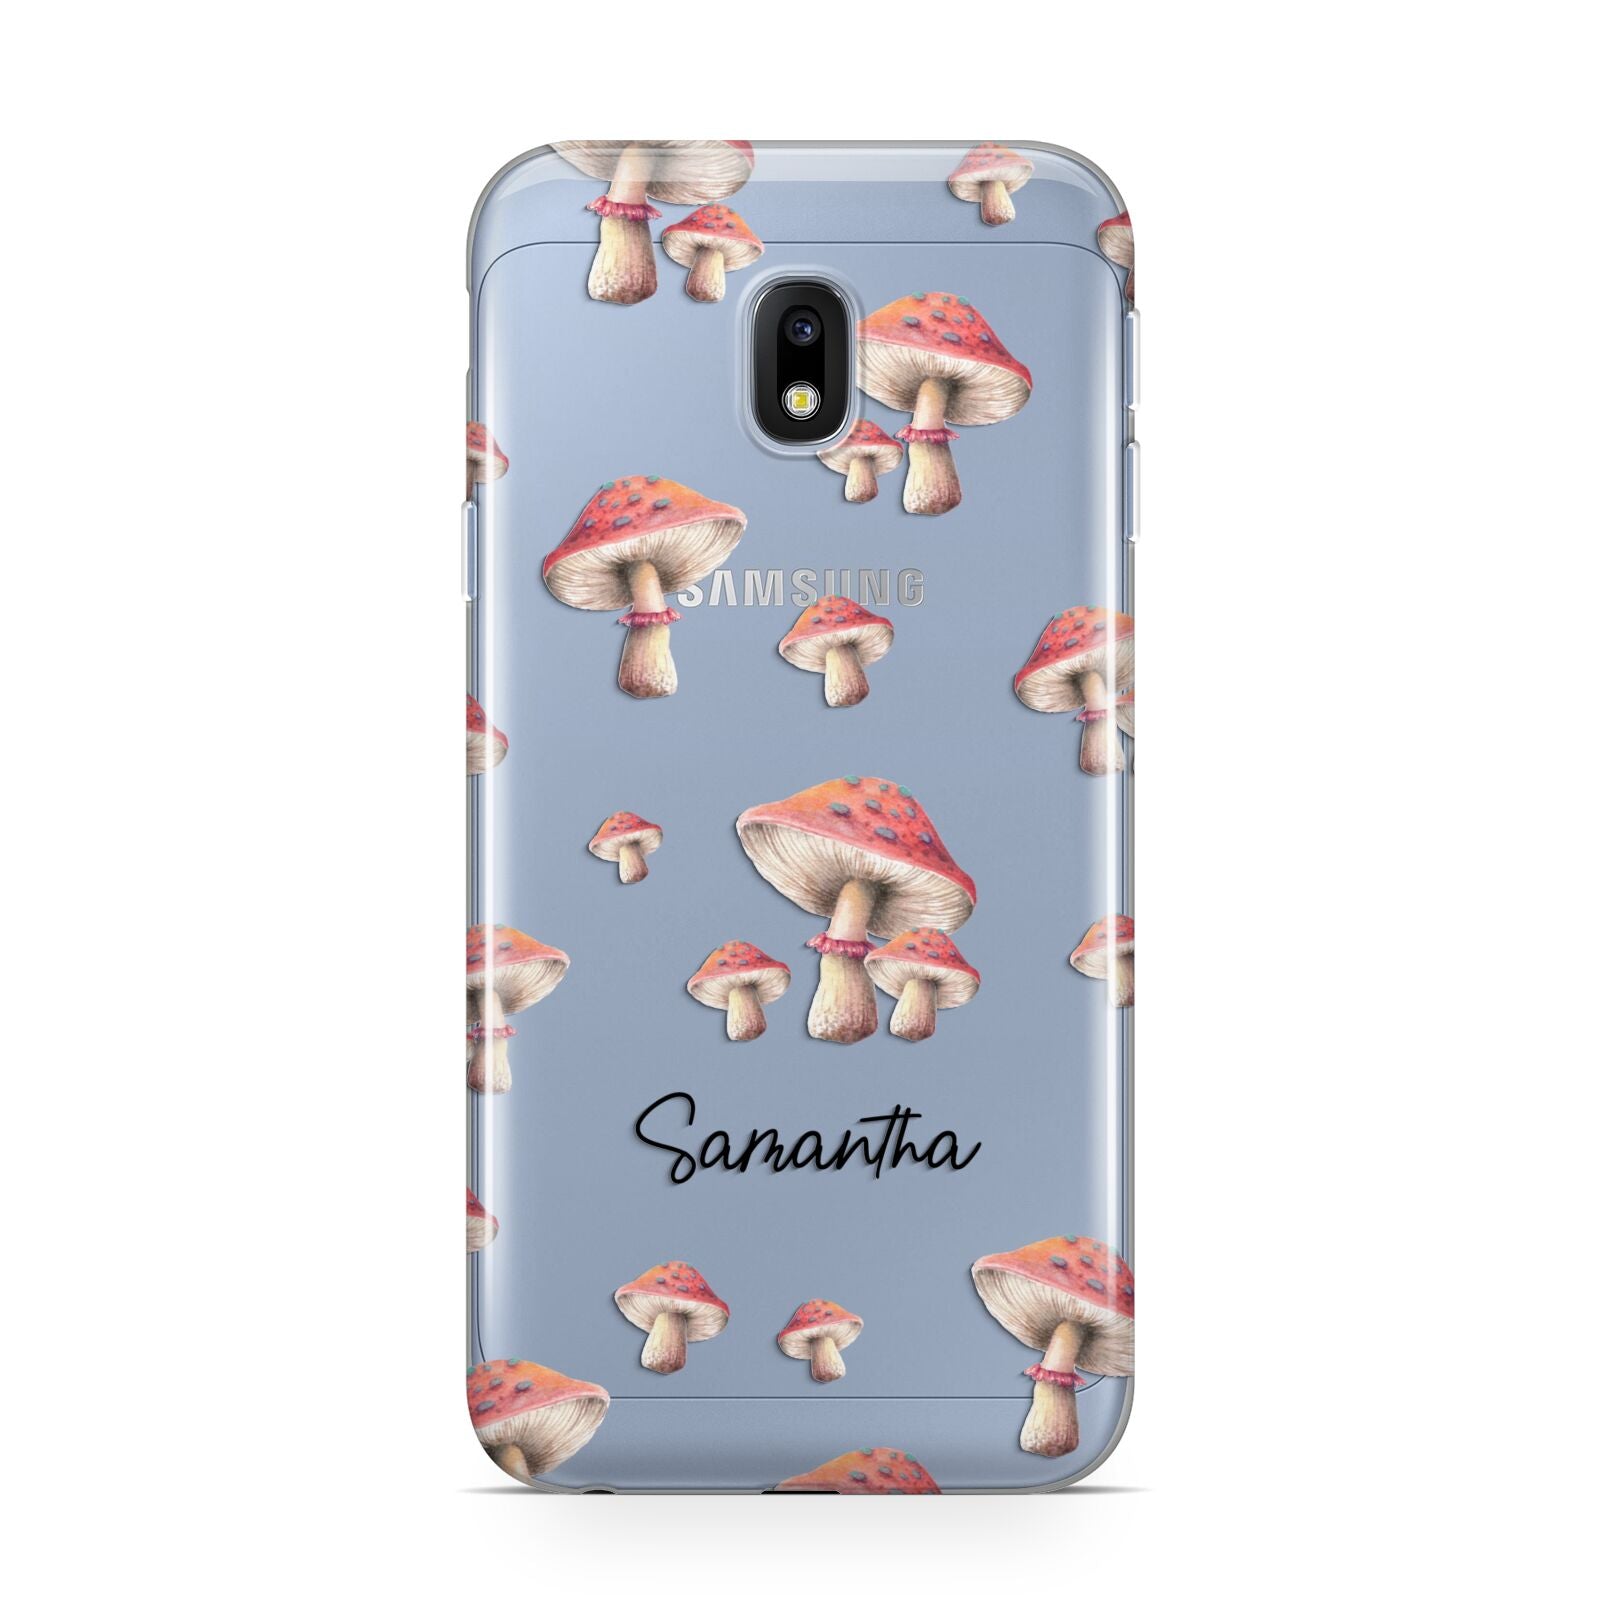 Mushroom Illustrations with Name Samsung Galaxy J3 2017 Case